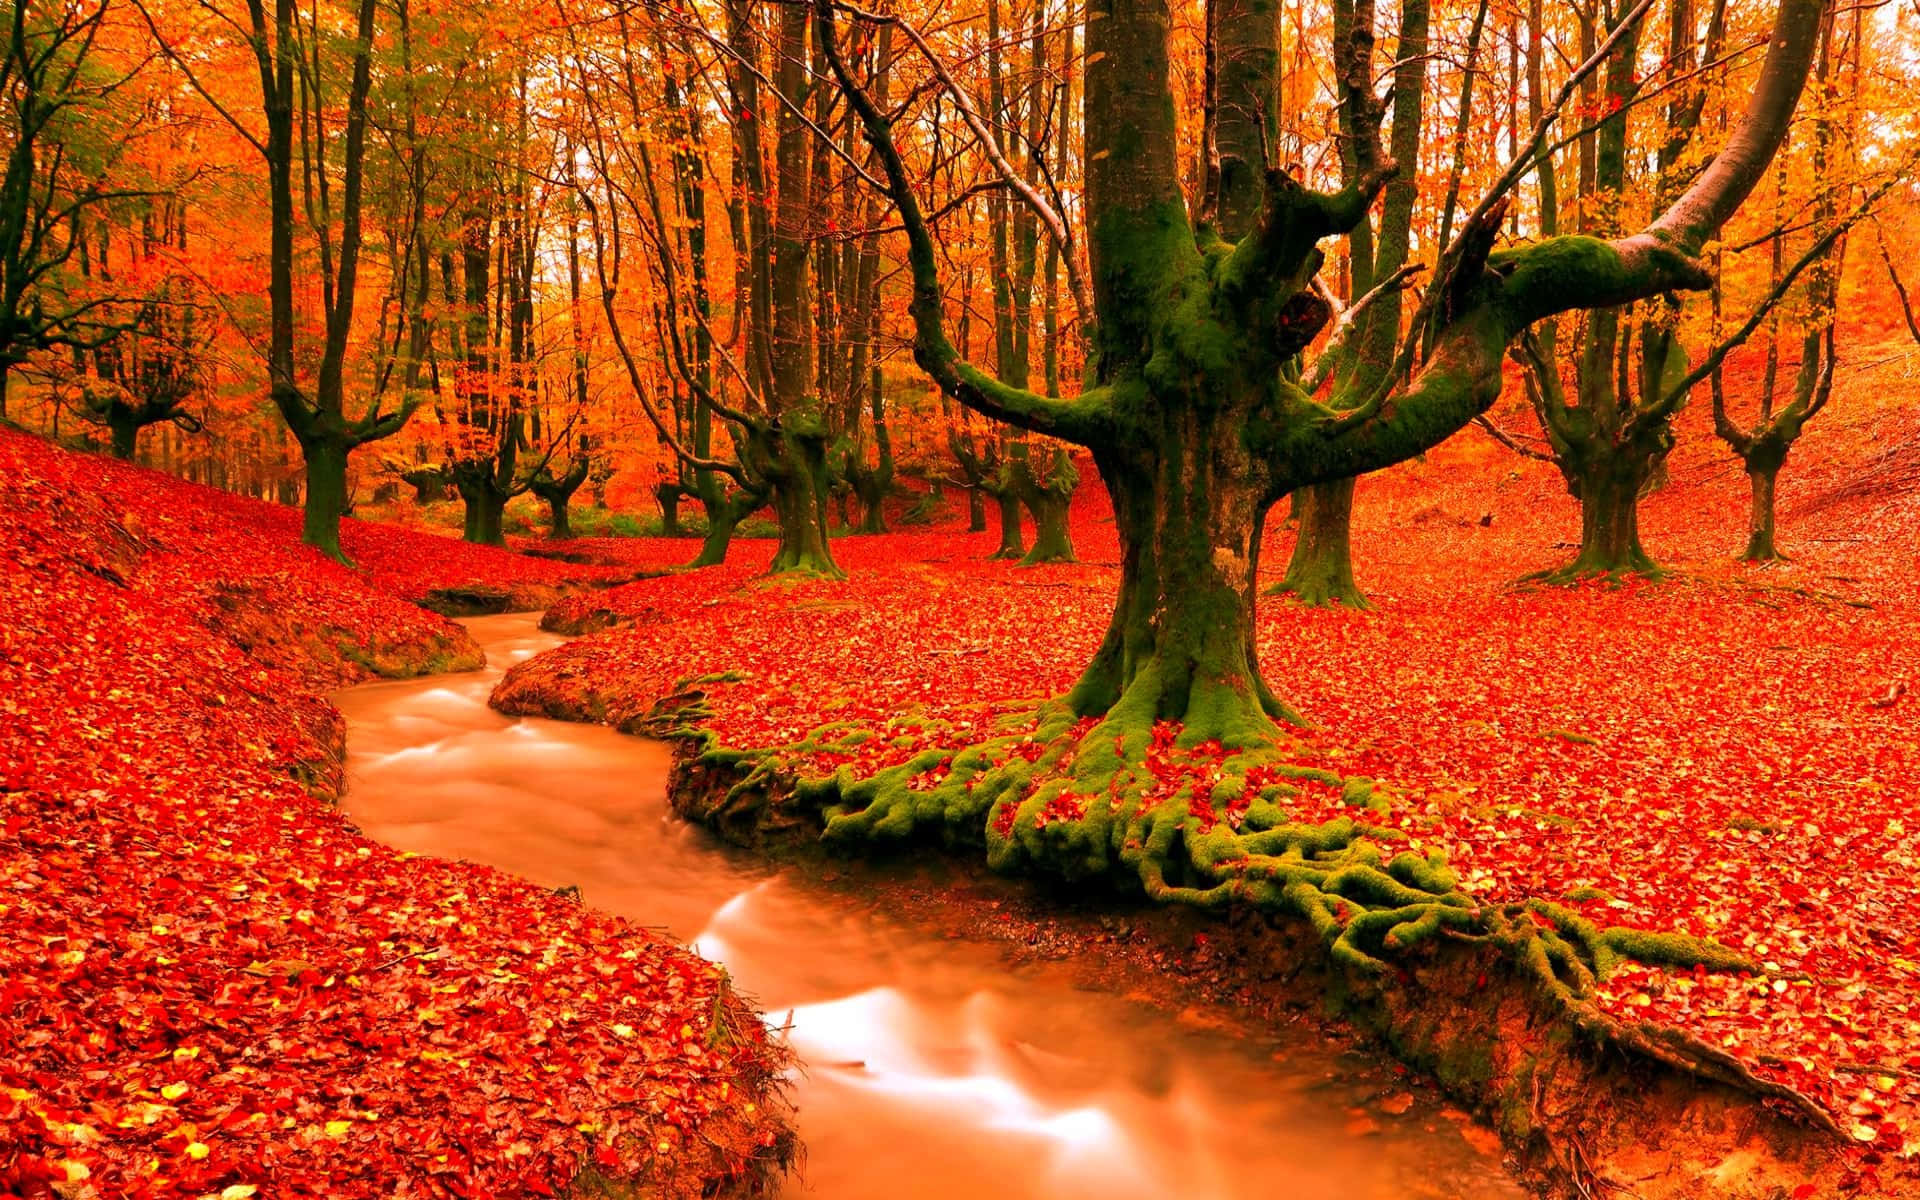 Take in the beauty of autumn season.